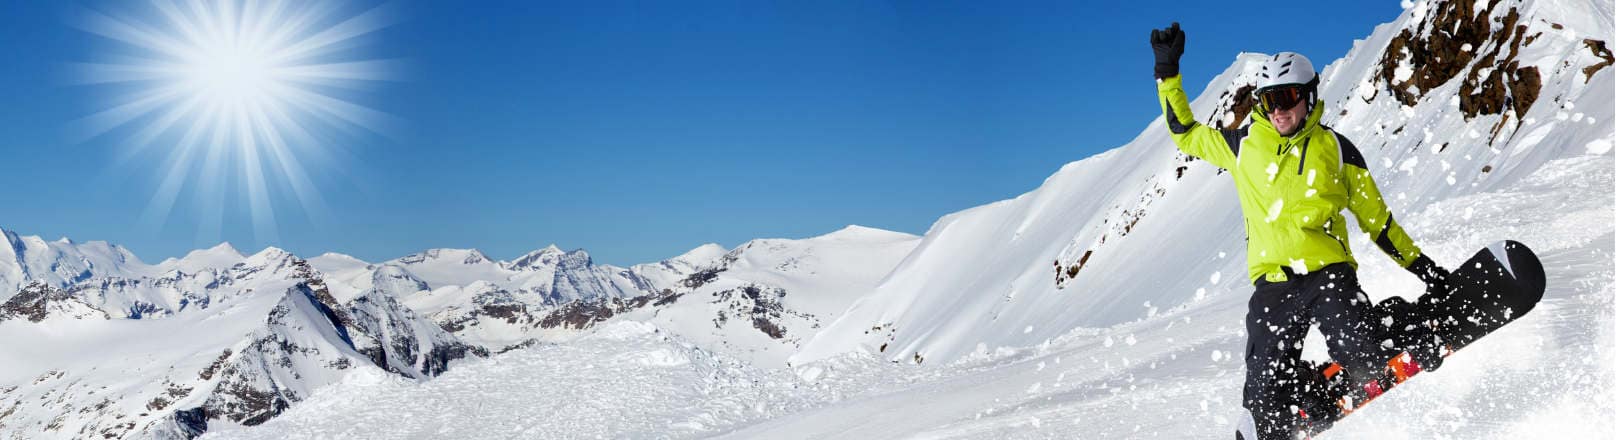 Les stations de ski en Isère